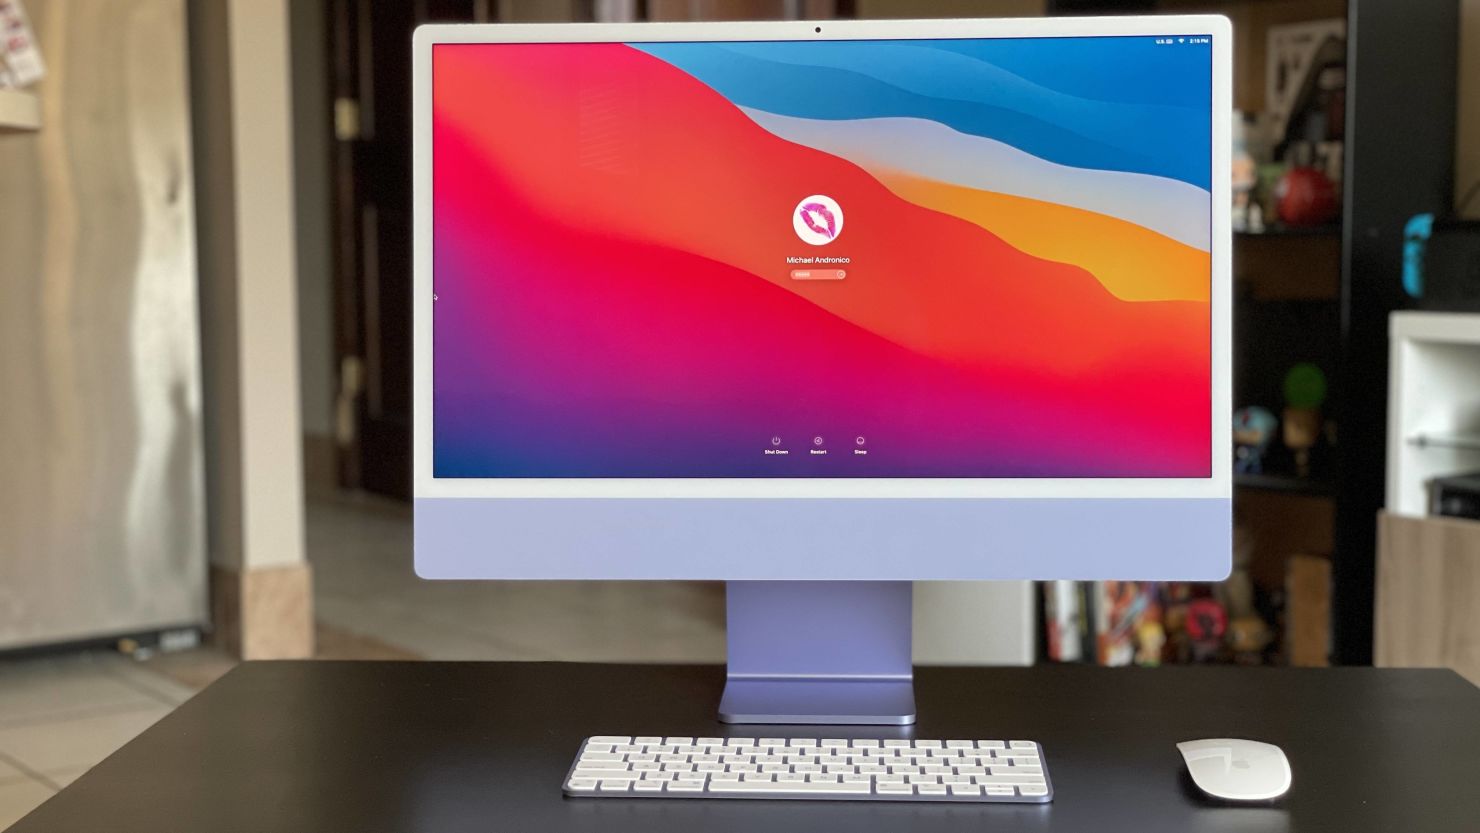 Apple 2021 iMac All in one Desktop Computer with M1 chip: 8-core CPU,  7-core GPU, 24-inch Retina Display, 8GB RAM, 256GB SSD Storage, Matching